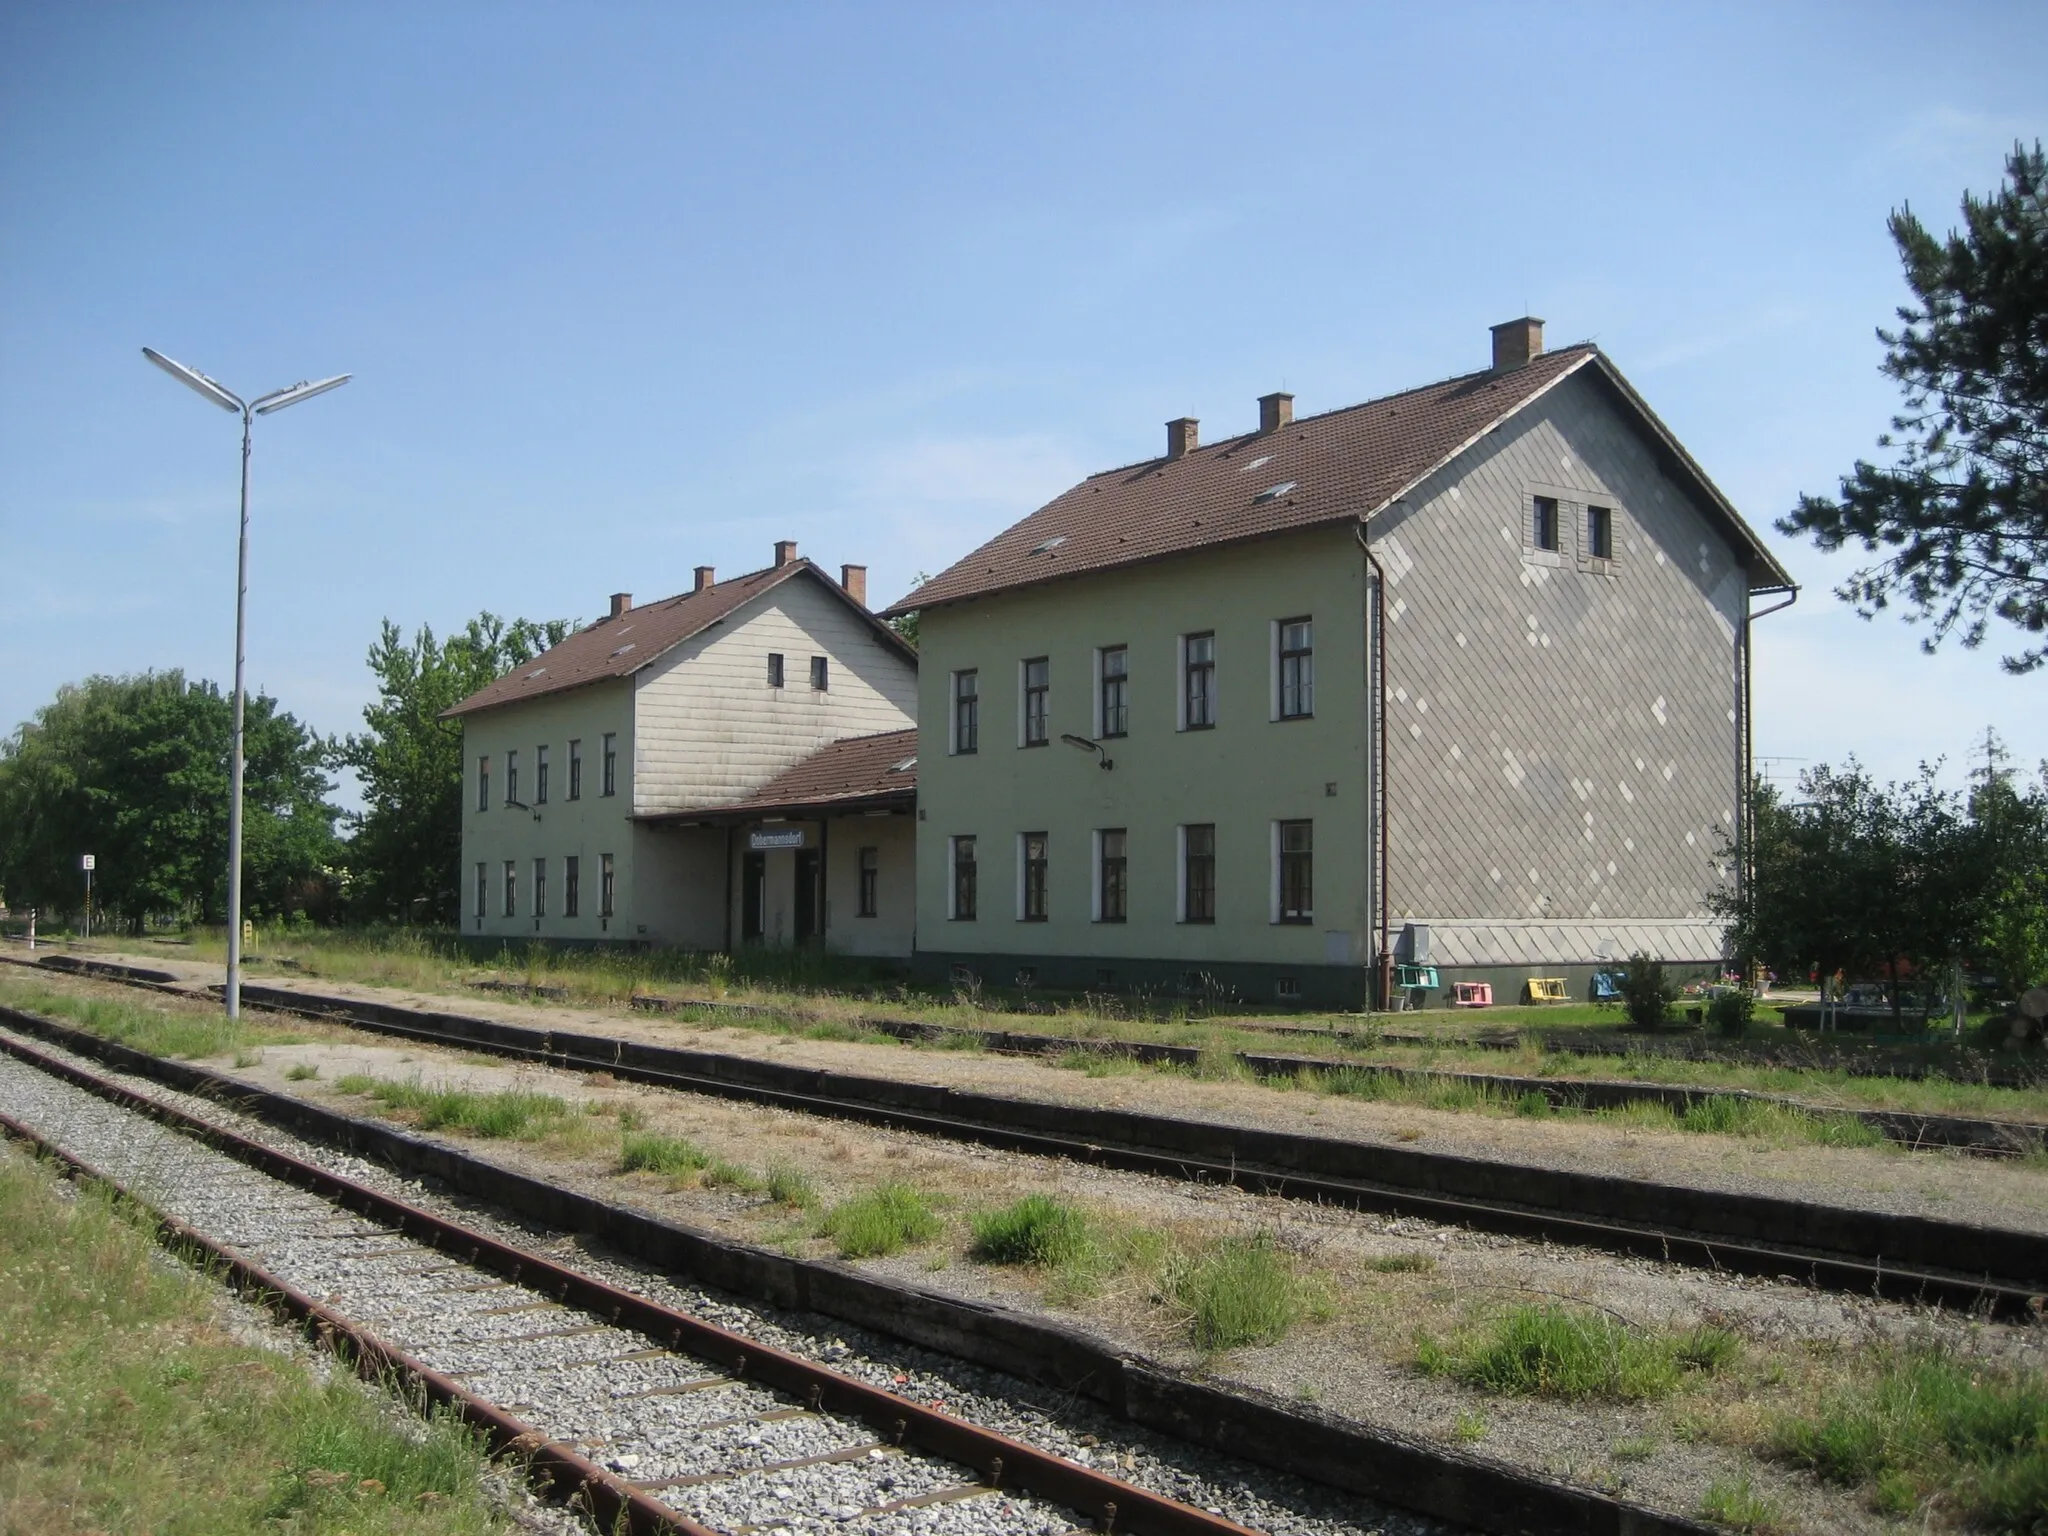 Photo showing: Dobermannsdorf train station located in Lower Austria